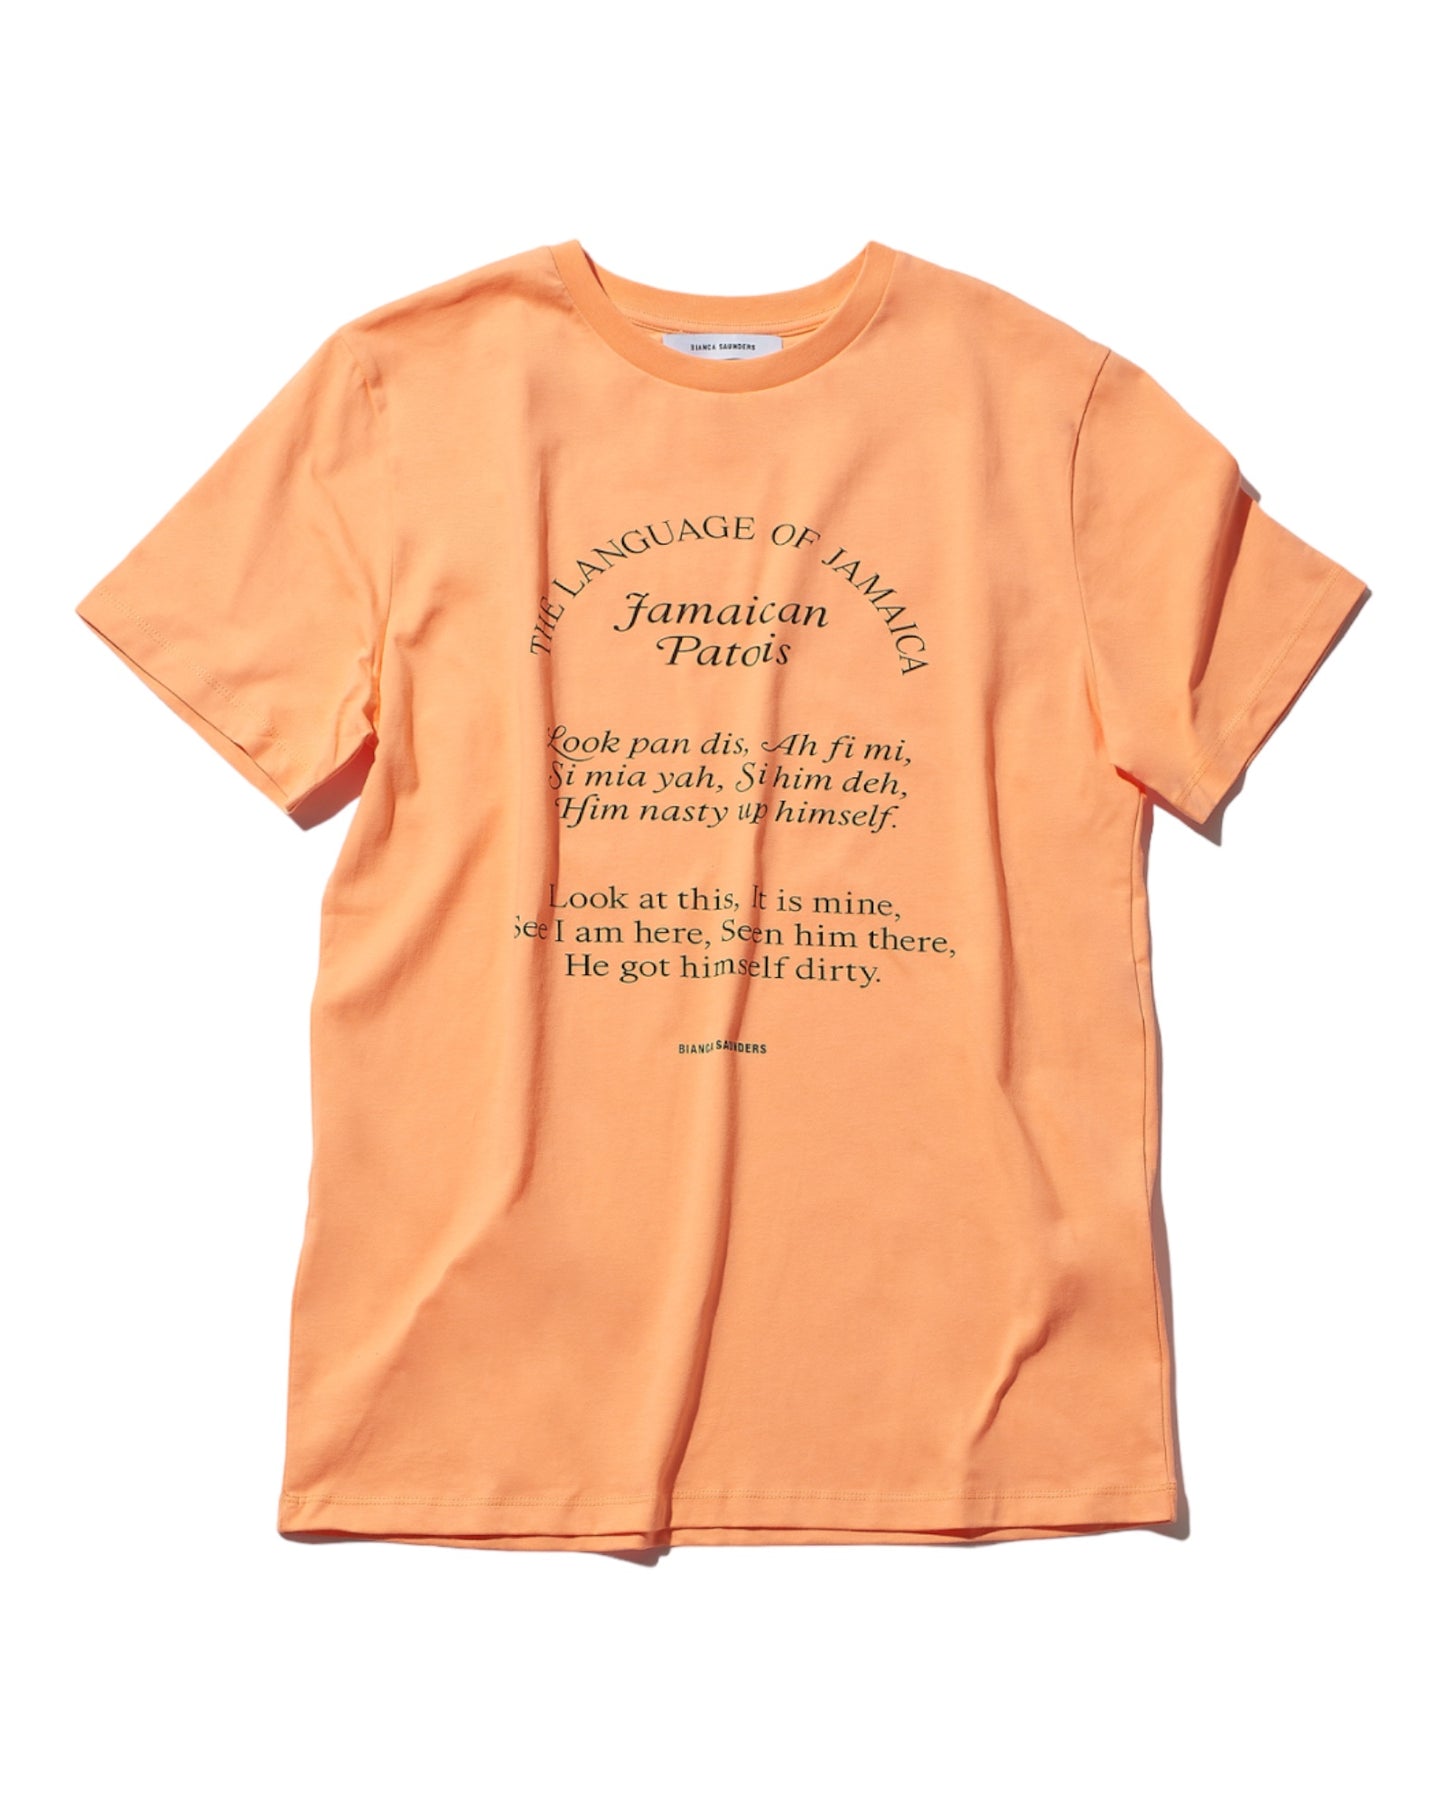 Patois T-Shirt Orange